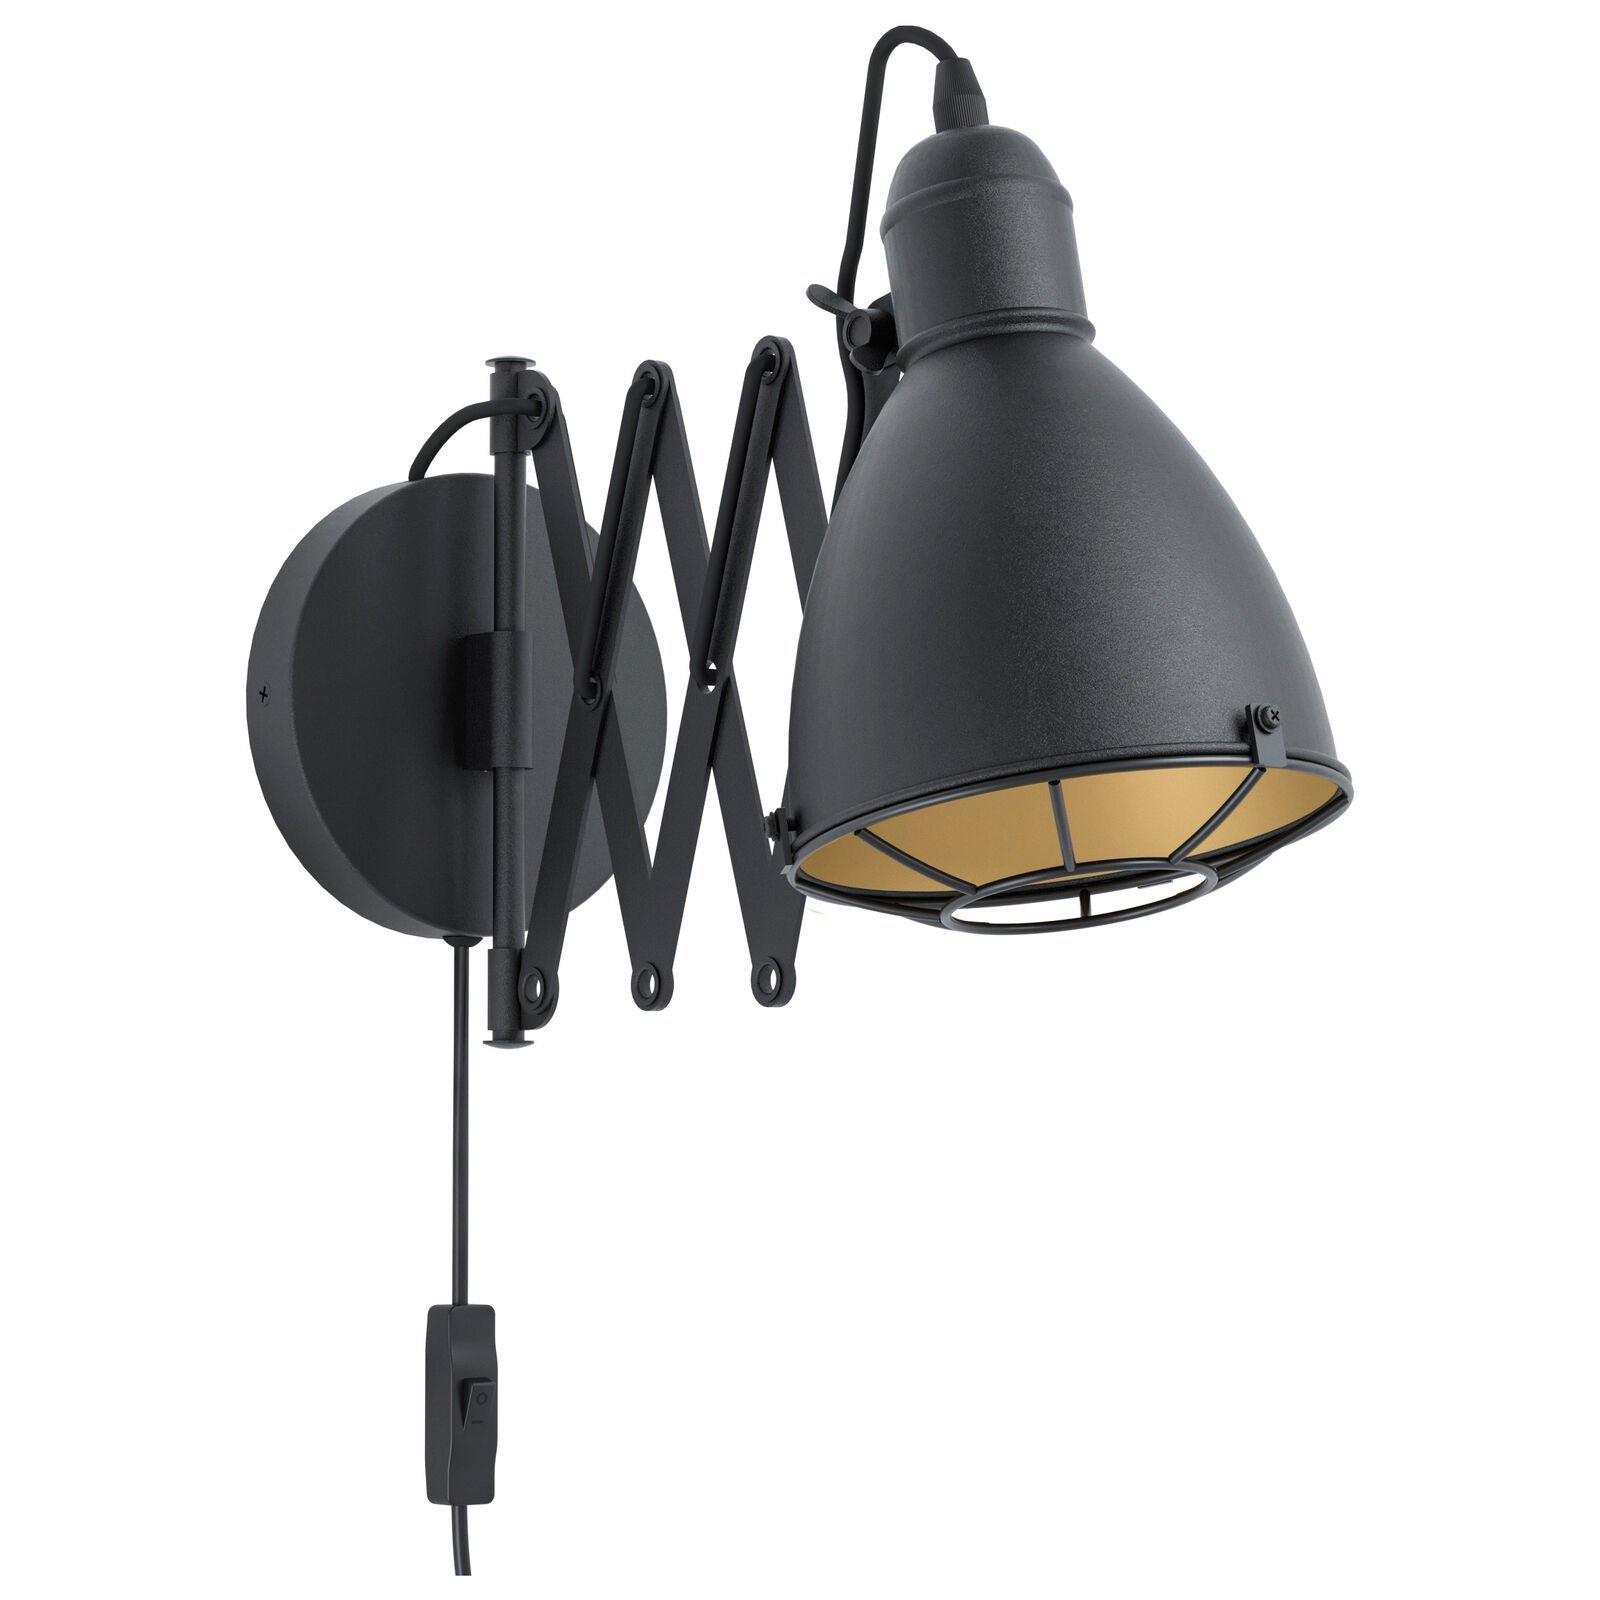 LED Wall Light / Sconce Black & Gold Adjustable Round Shade 1 x 28W E27 Bulb